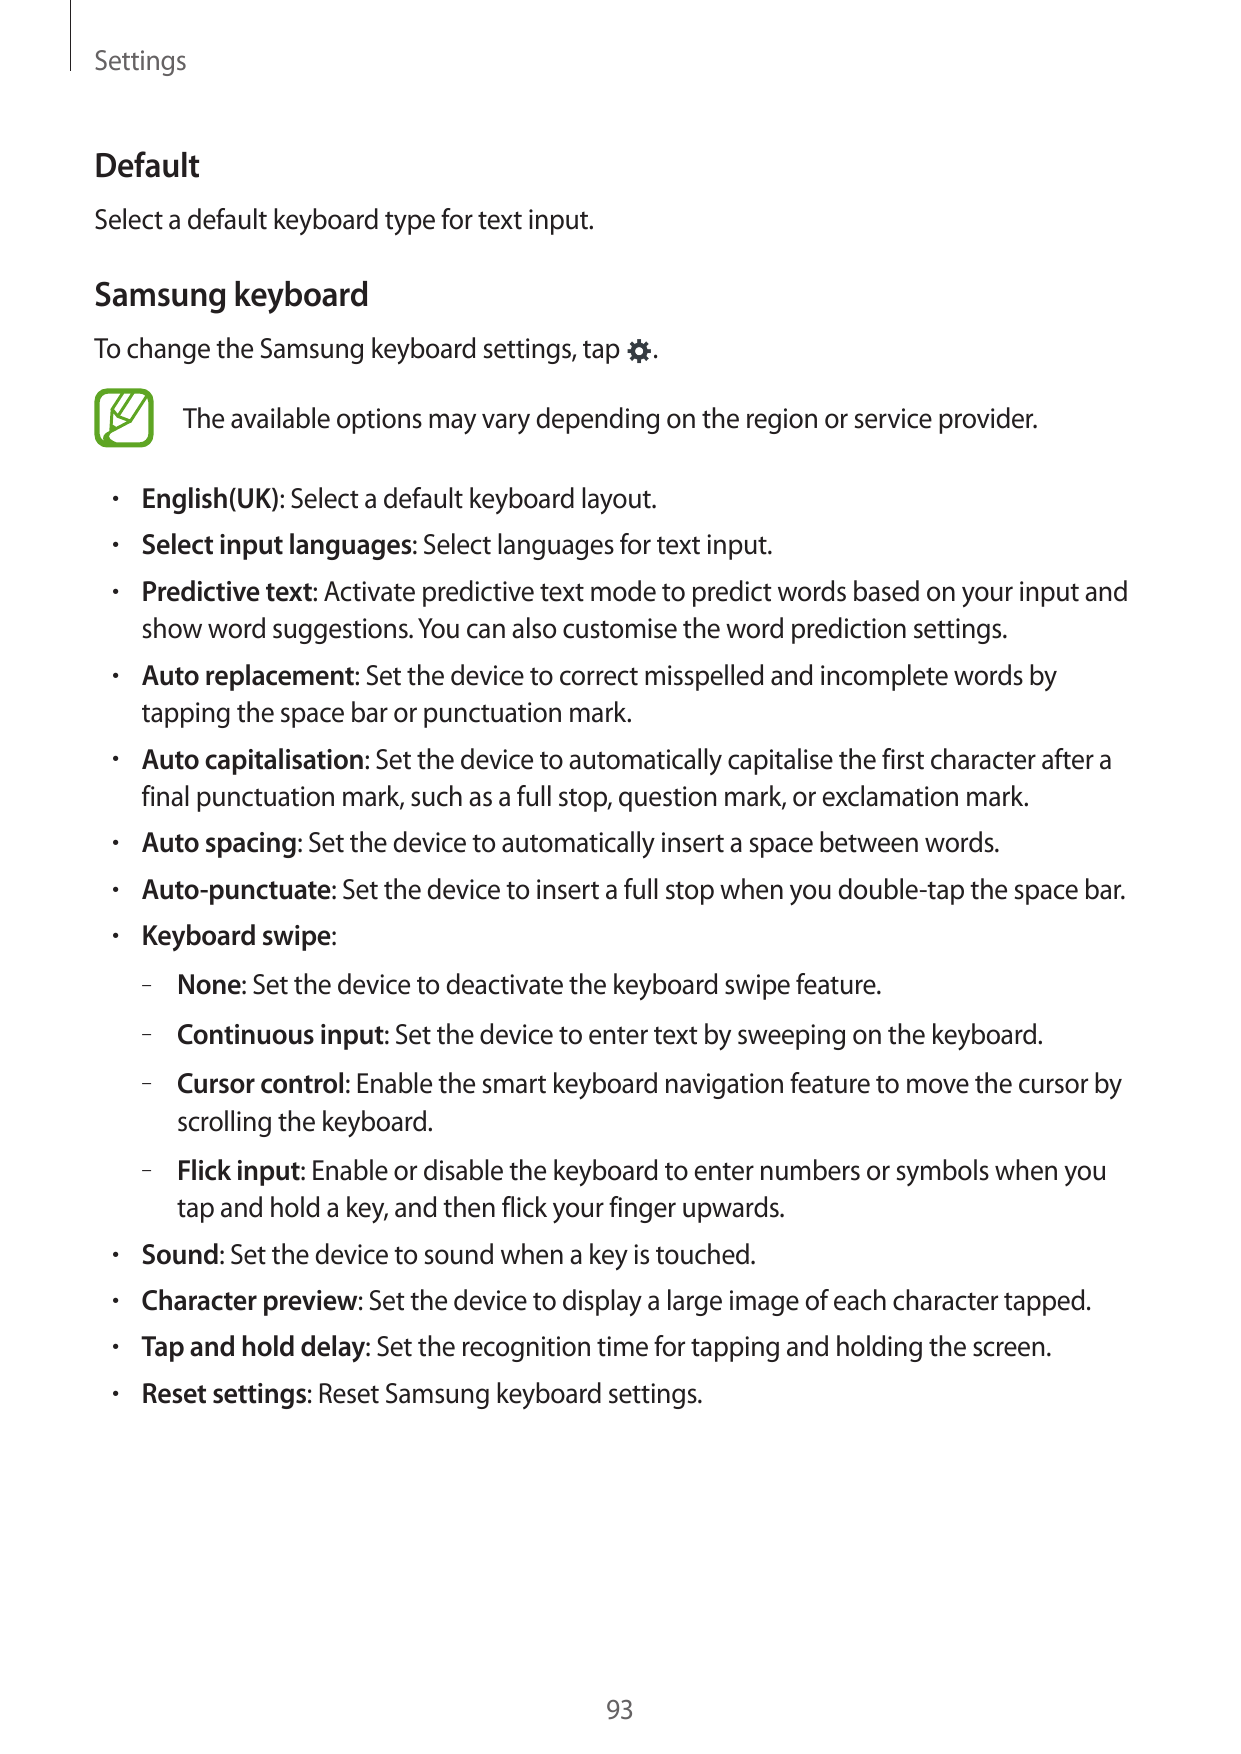 SettingsDefaultSelect a default keyboard type for text input.Samsung keyboardTo change the Samsung keyboard settings, tap.The av